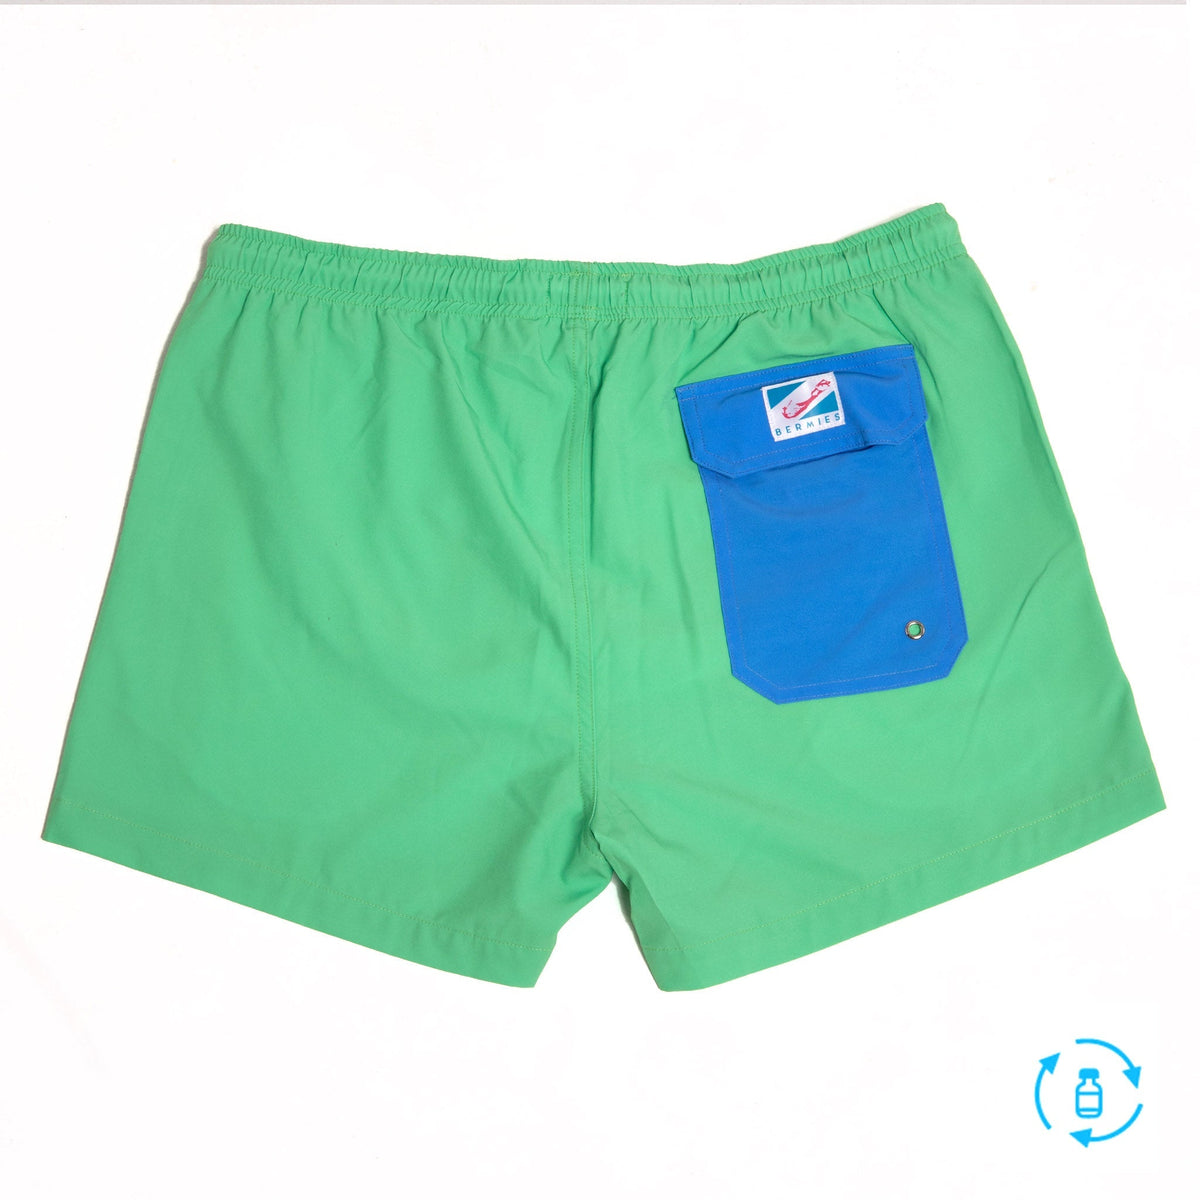 Green Blue Pocket - 3.5" Swim Trunks by Bermies